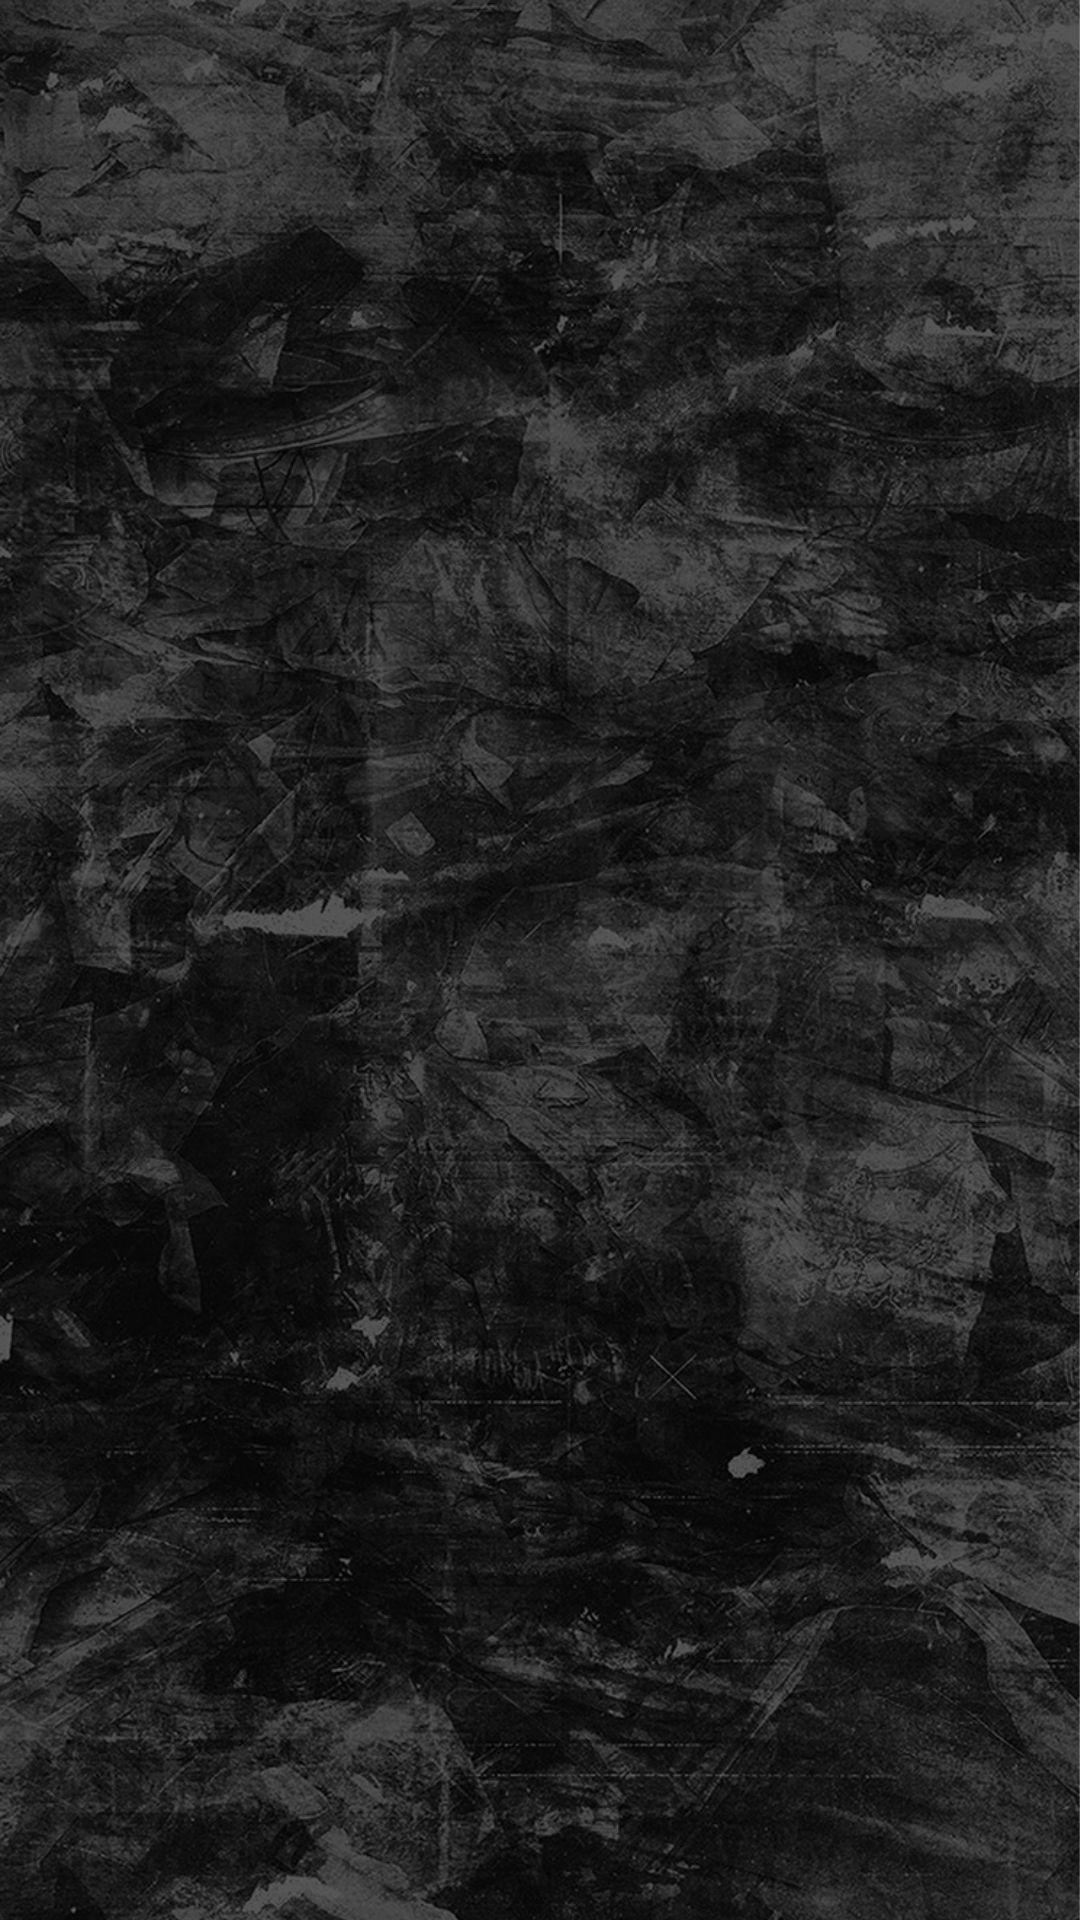 Wallpaper.wiki Wonder Art Illust Grunge Abstract Black IPhone 5